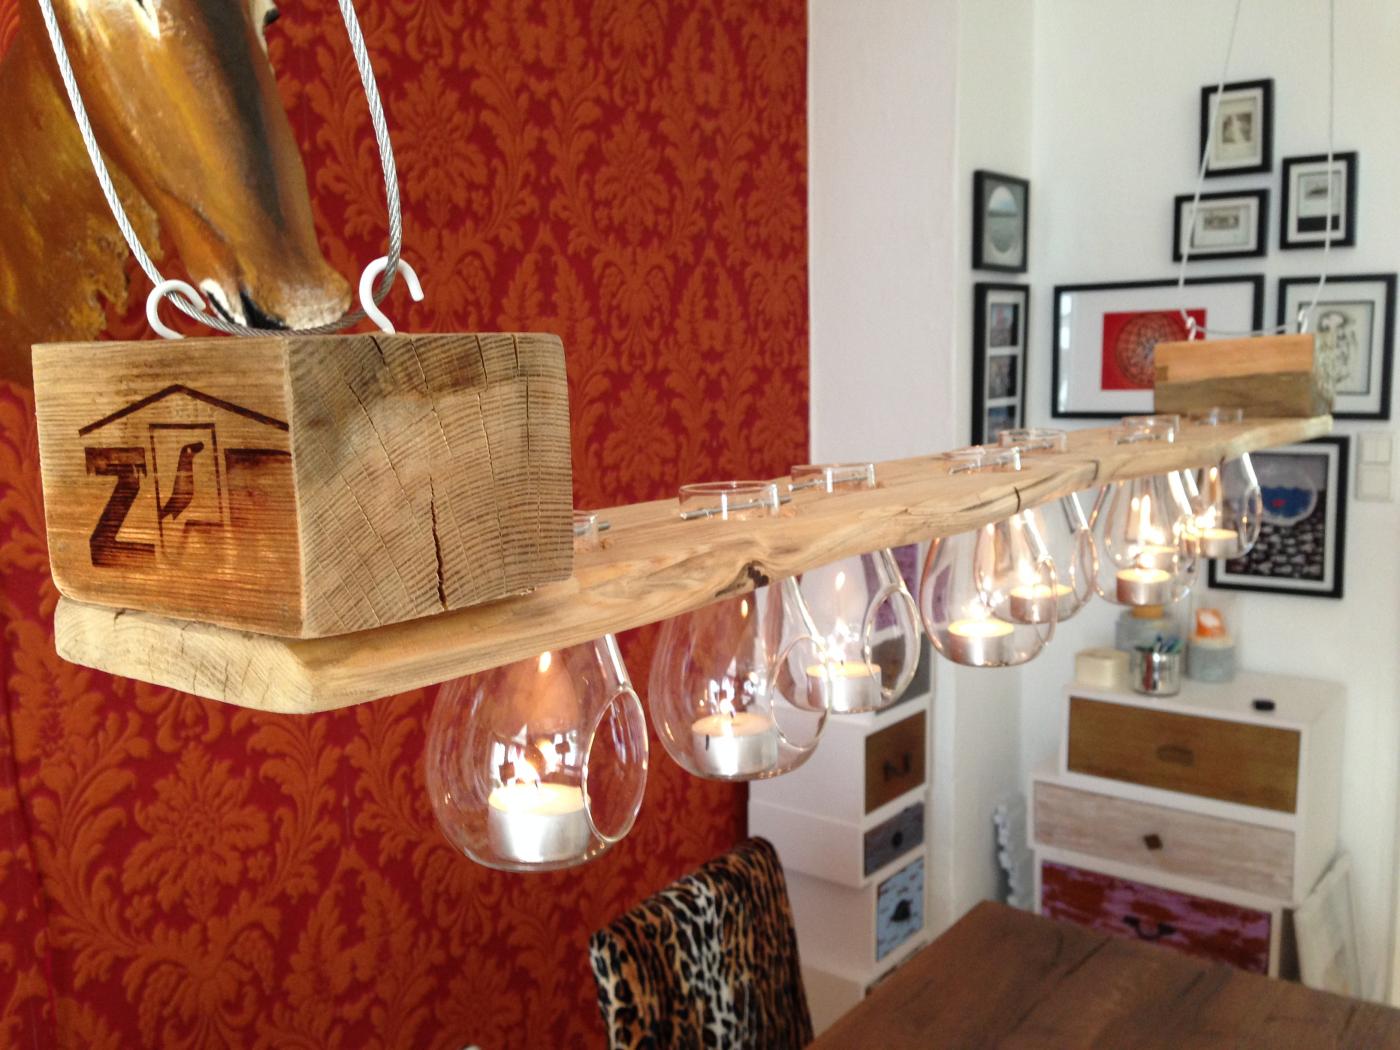 Tealight pallet-chandelier: pallet wood, beeswax finish